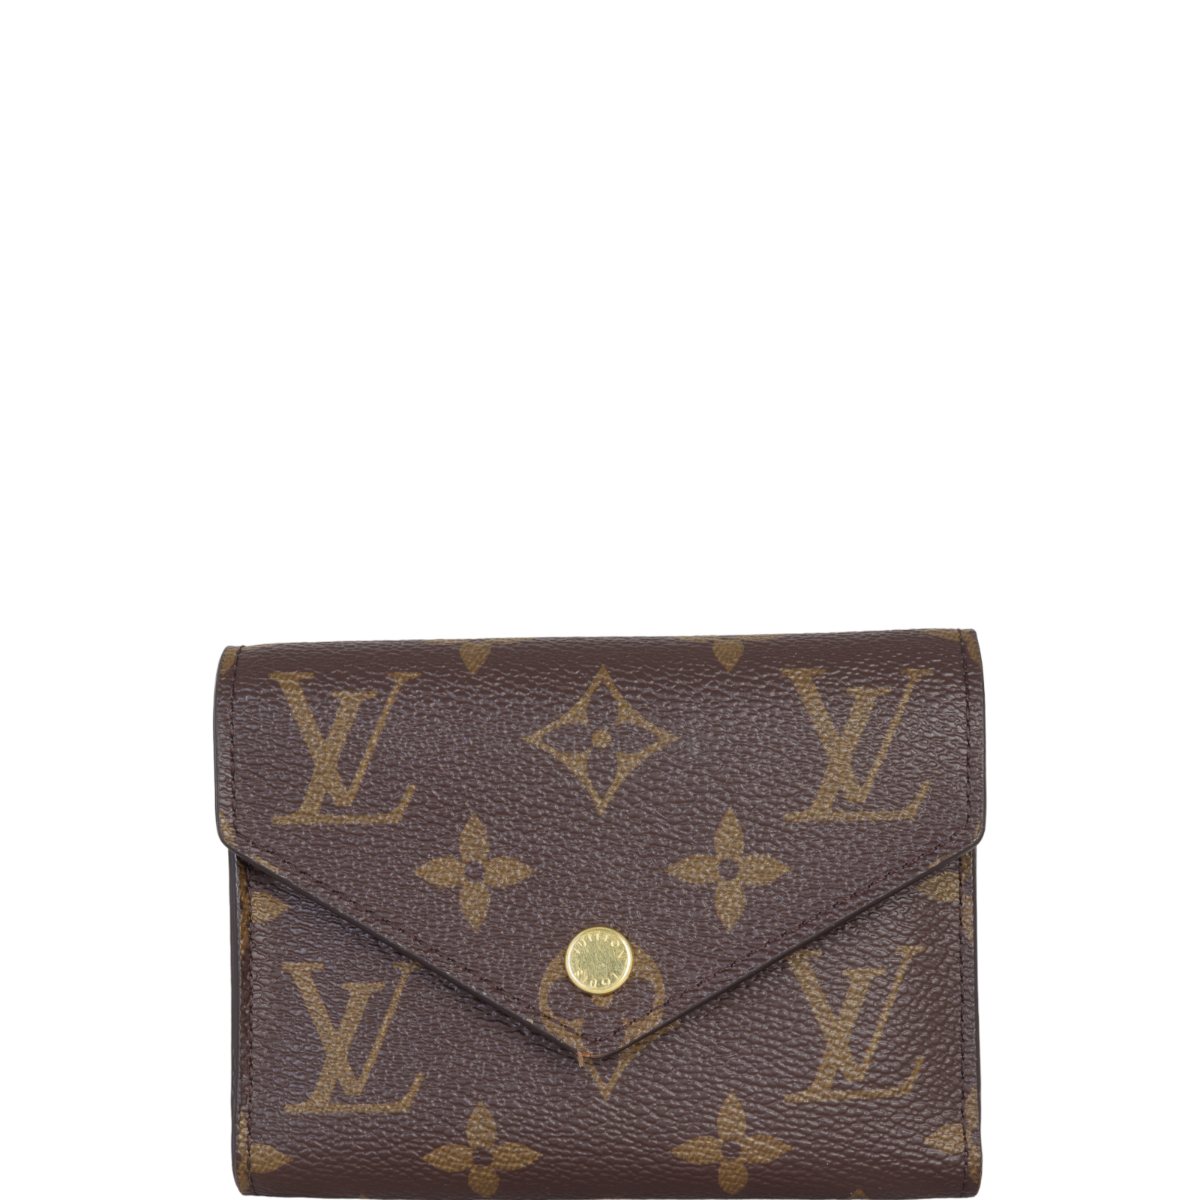 Discover Louis Vuitton Victorine Wallet: Feminine yet functional